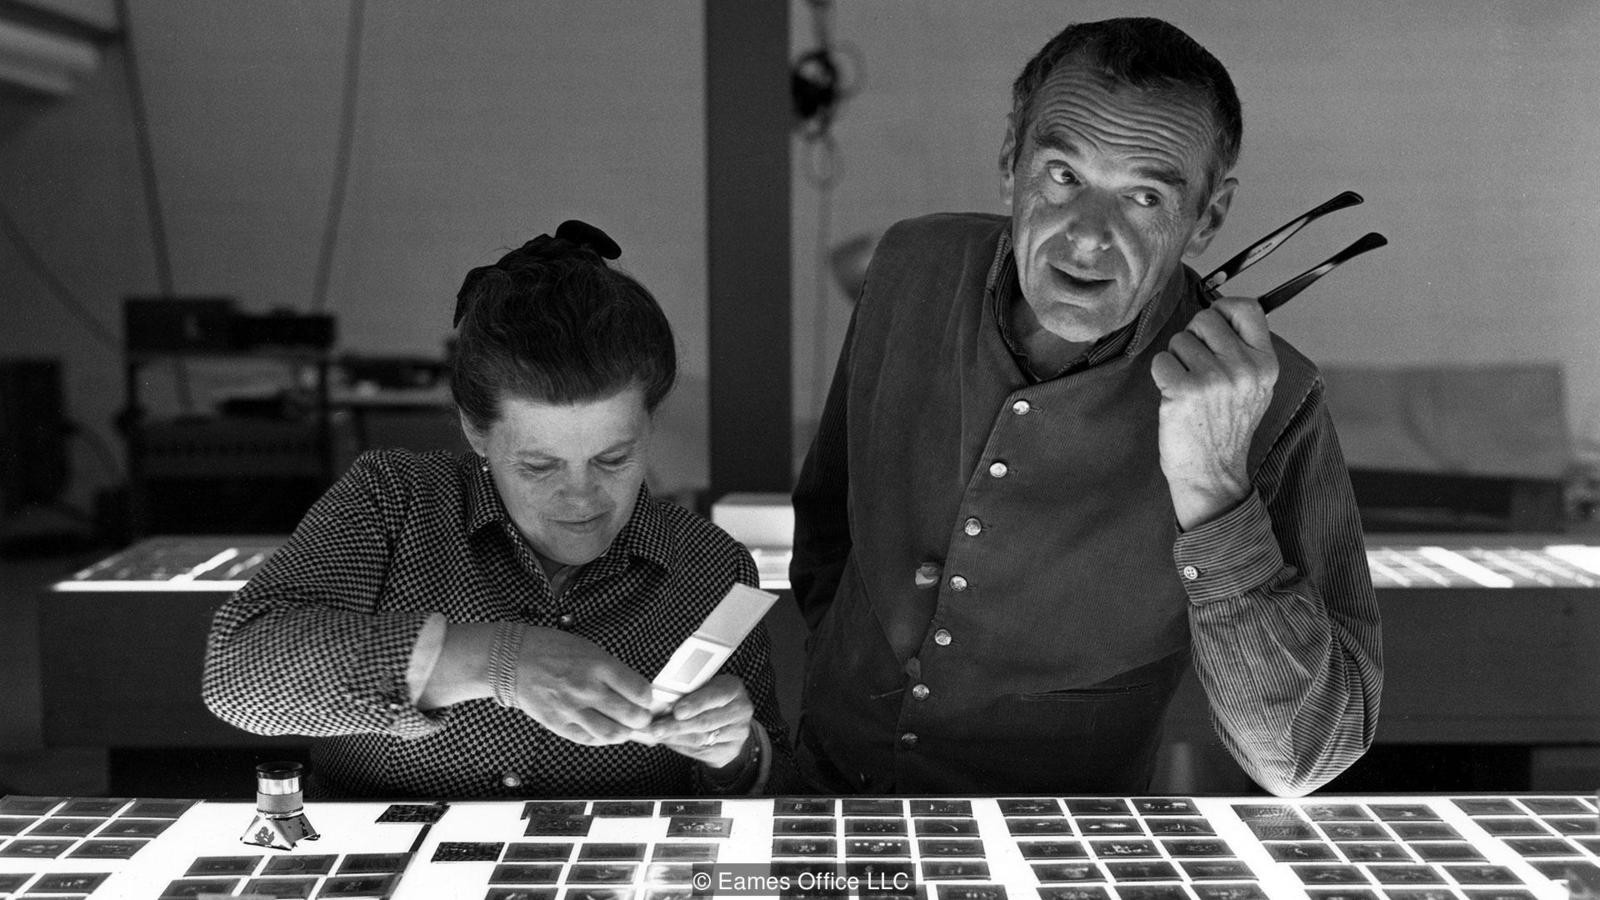 Charles και Ray Eames: Οι μάγοι του του design που έβαλαν τον μοντερνισμό σε όλα τα σπίτια